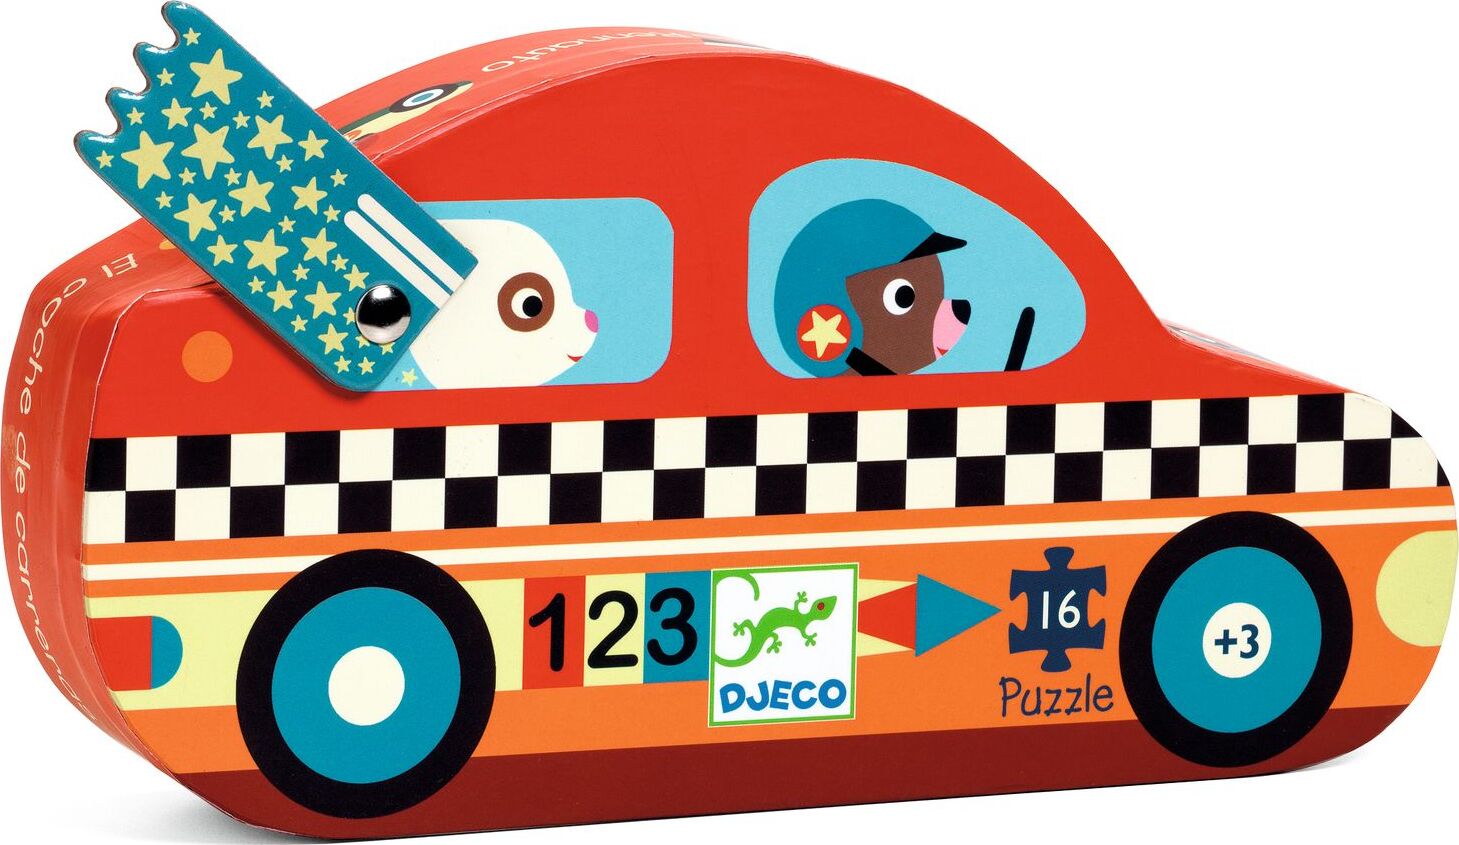 DJECO The Racing Car 16pc Silhouette Mini Jigsaw Puzzle - Imagination Toys